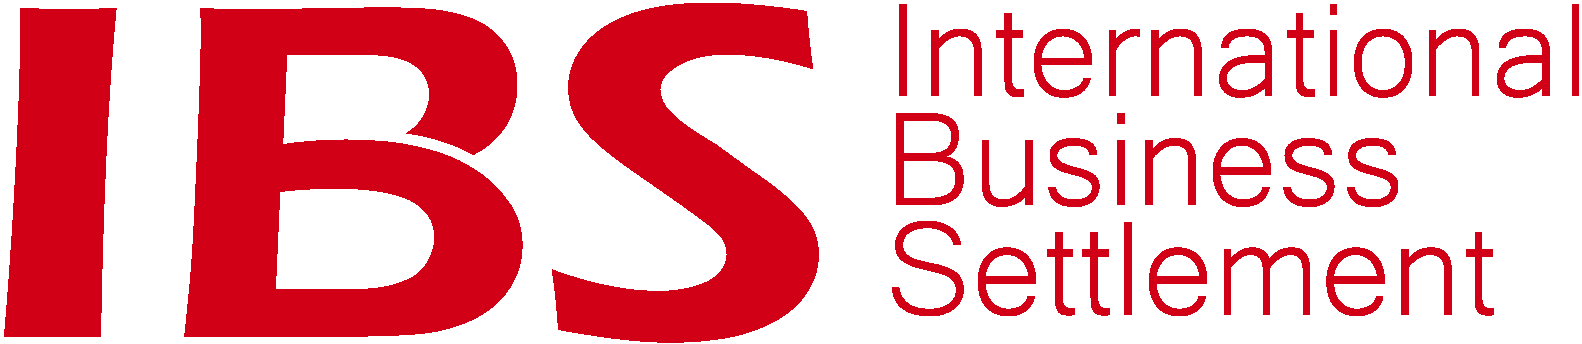 ibs logo